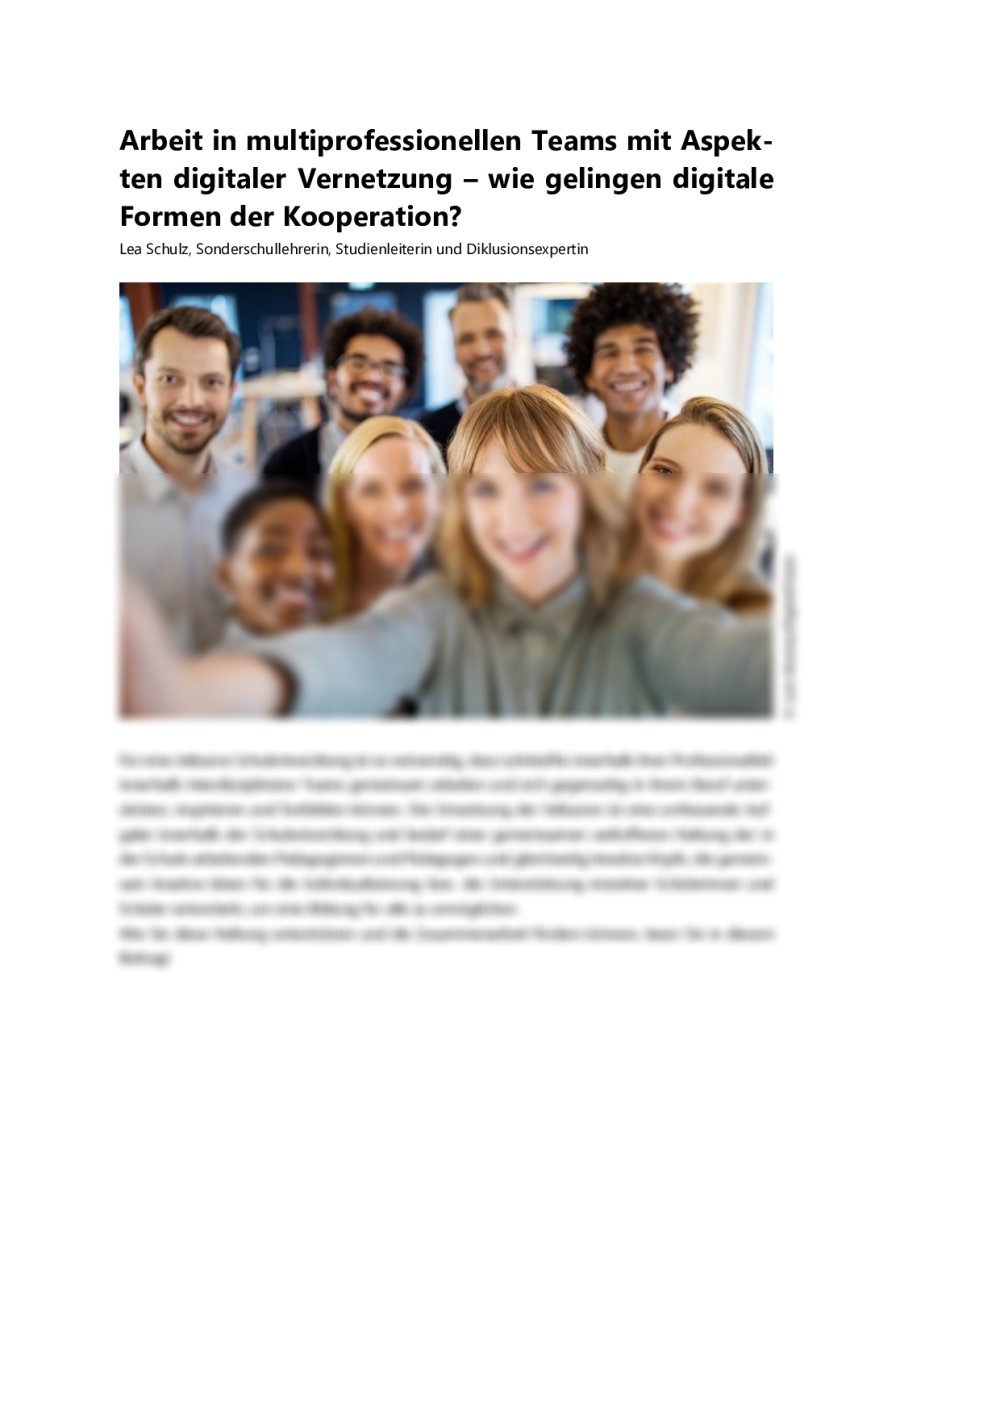 Multiprofessionelle Teams: wie gelingen digitale Formen der Kooperation? - Seite 1